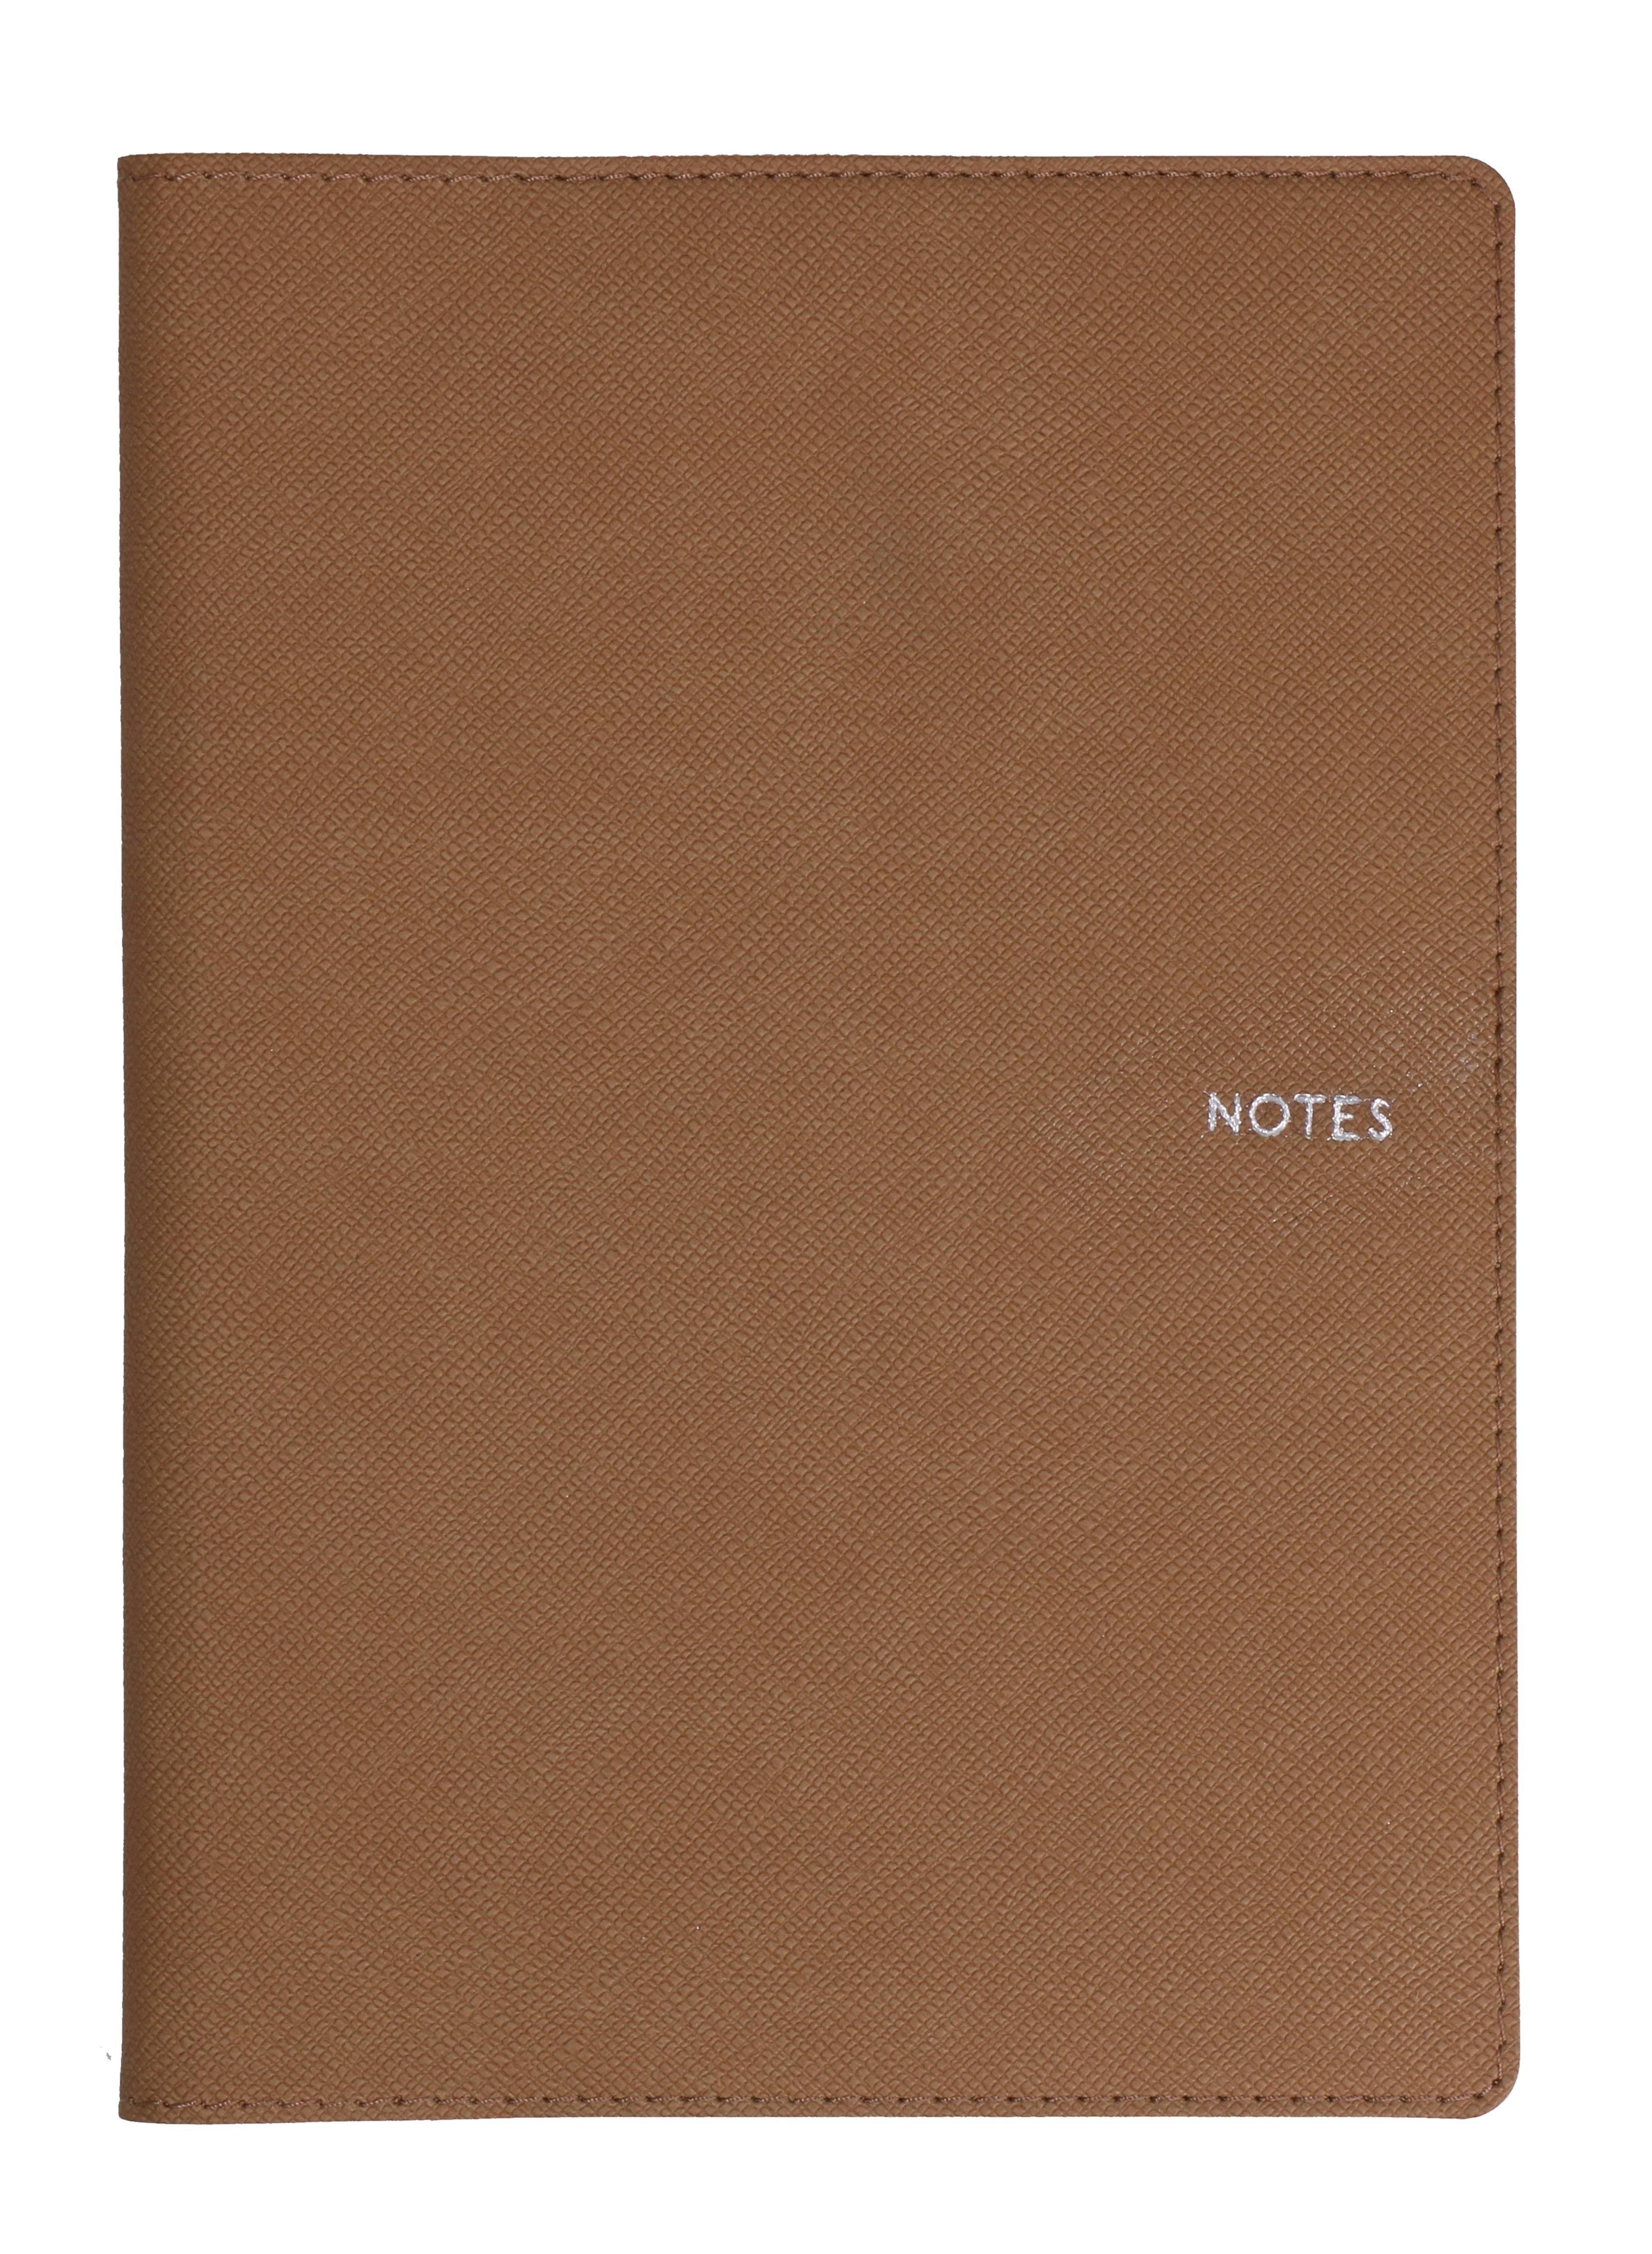 Collins Metropolitan Melbourne Ruled Notebook, Size A5